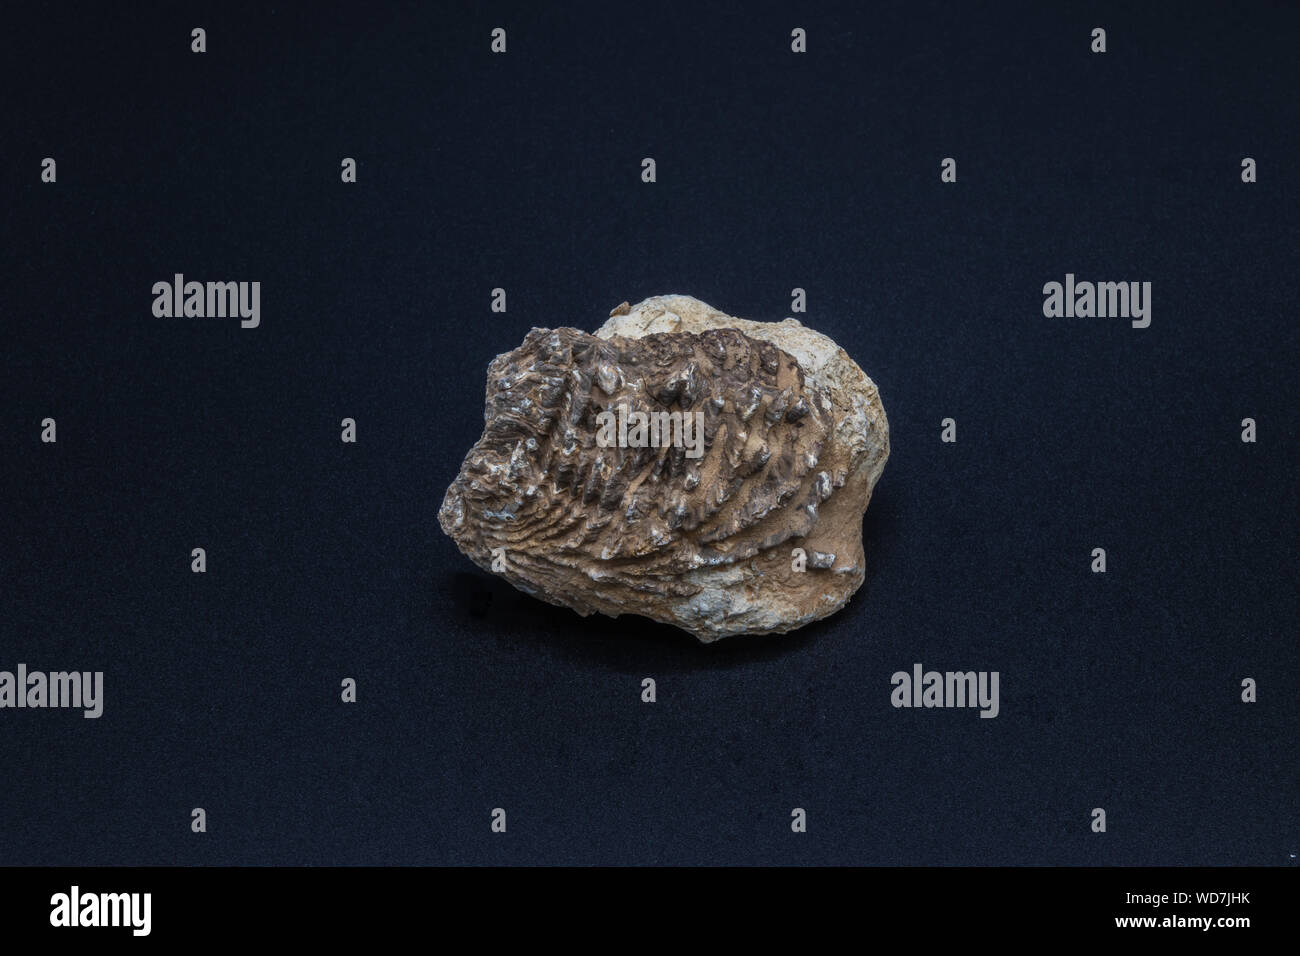 Fossil shell of a sea bivalve mollusk from Cenozoic sedimentary rocks of Saudi Arabia on the black background Stock Photo